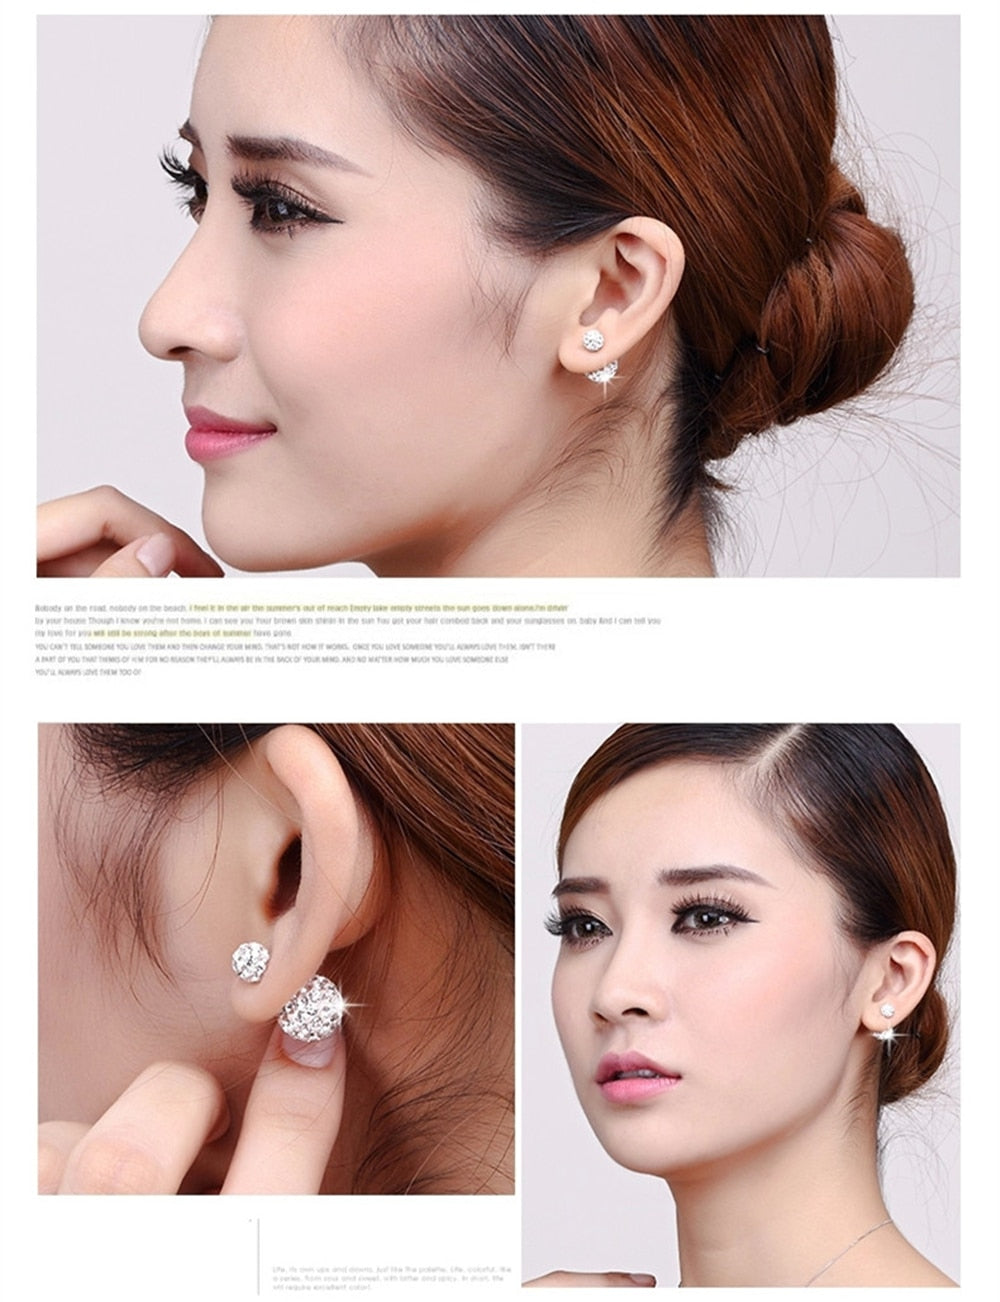 luxury zirconia female  vintage stud earrings